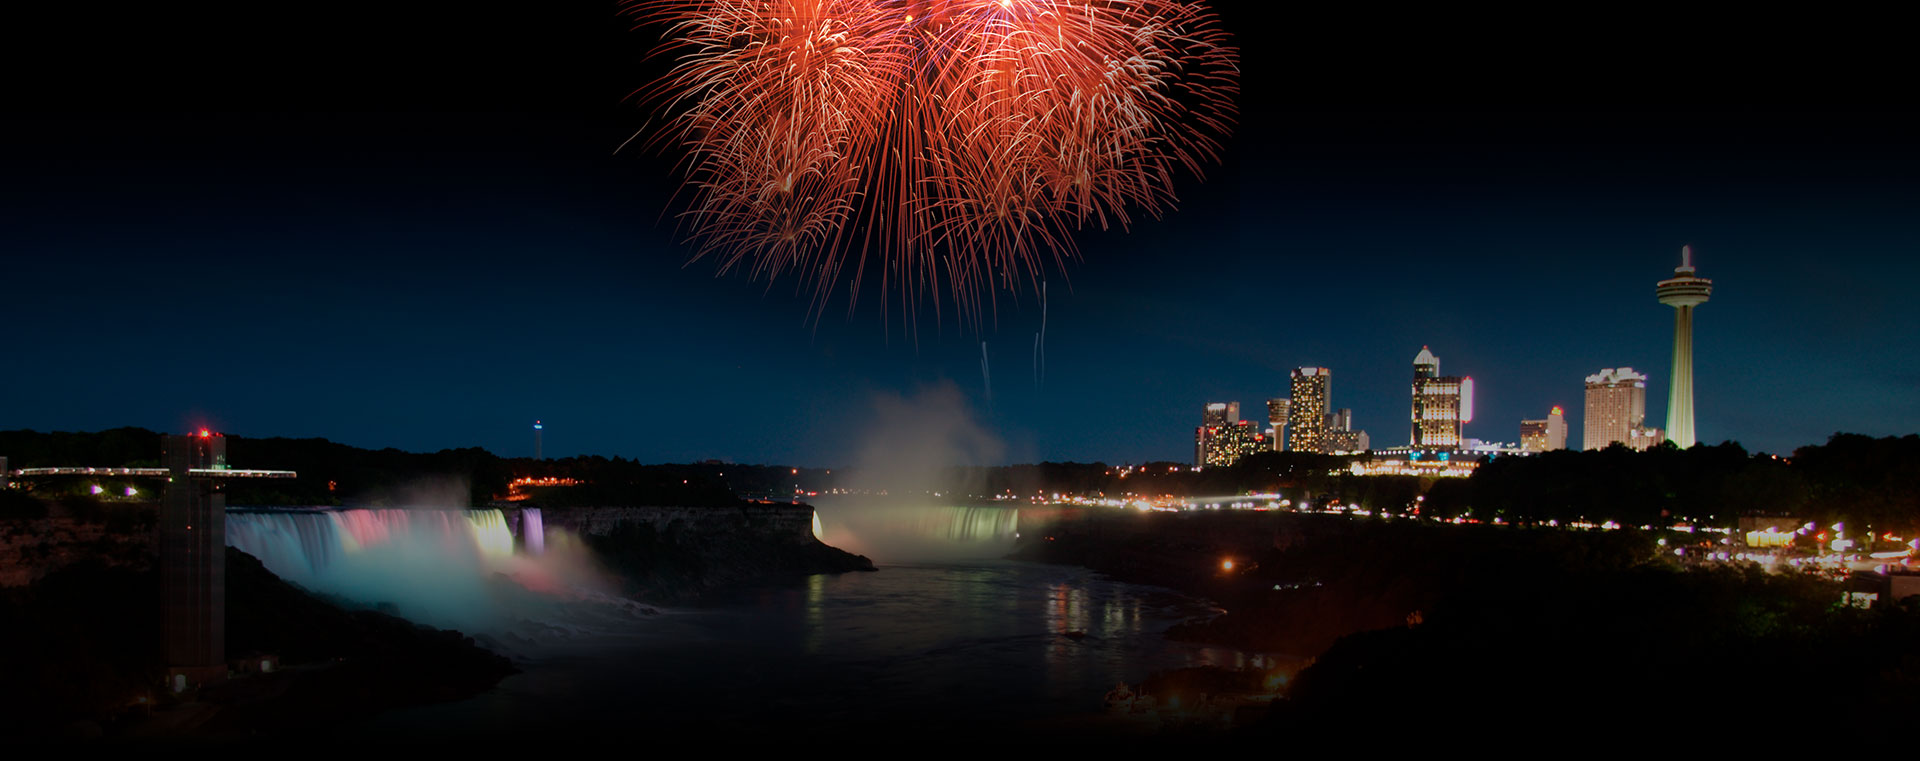 Fireworks & Illumination - Hotels in Niagara Falls